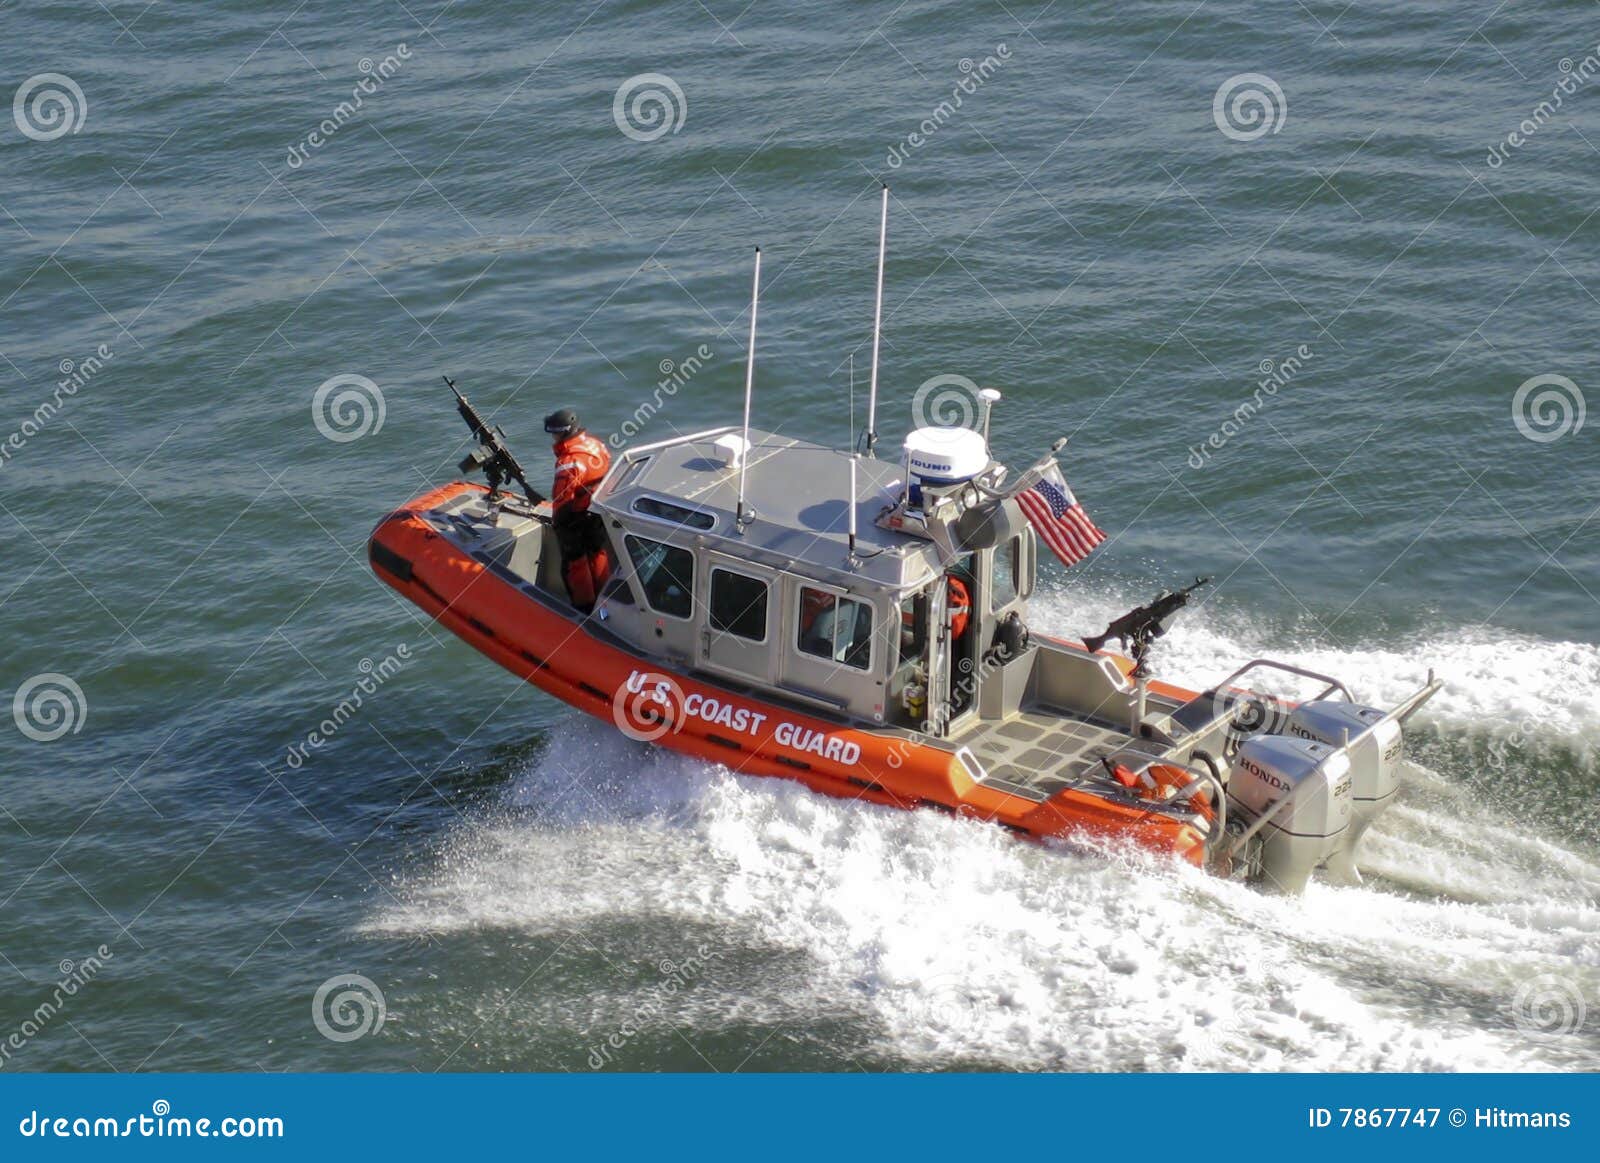 american coast guard boat